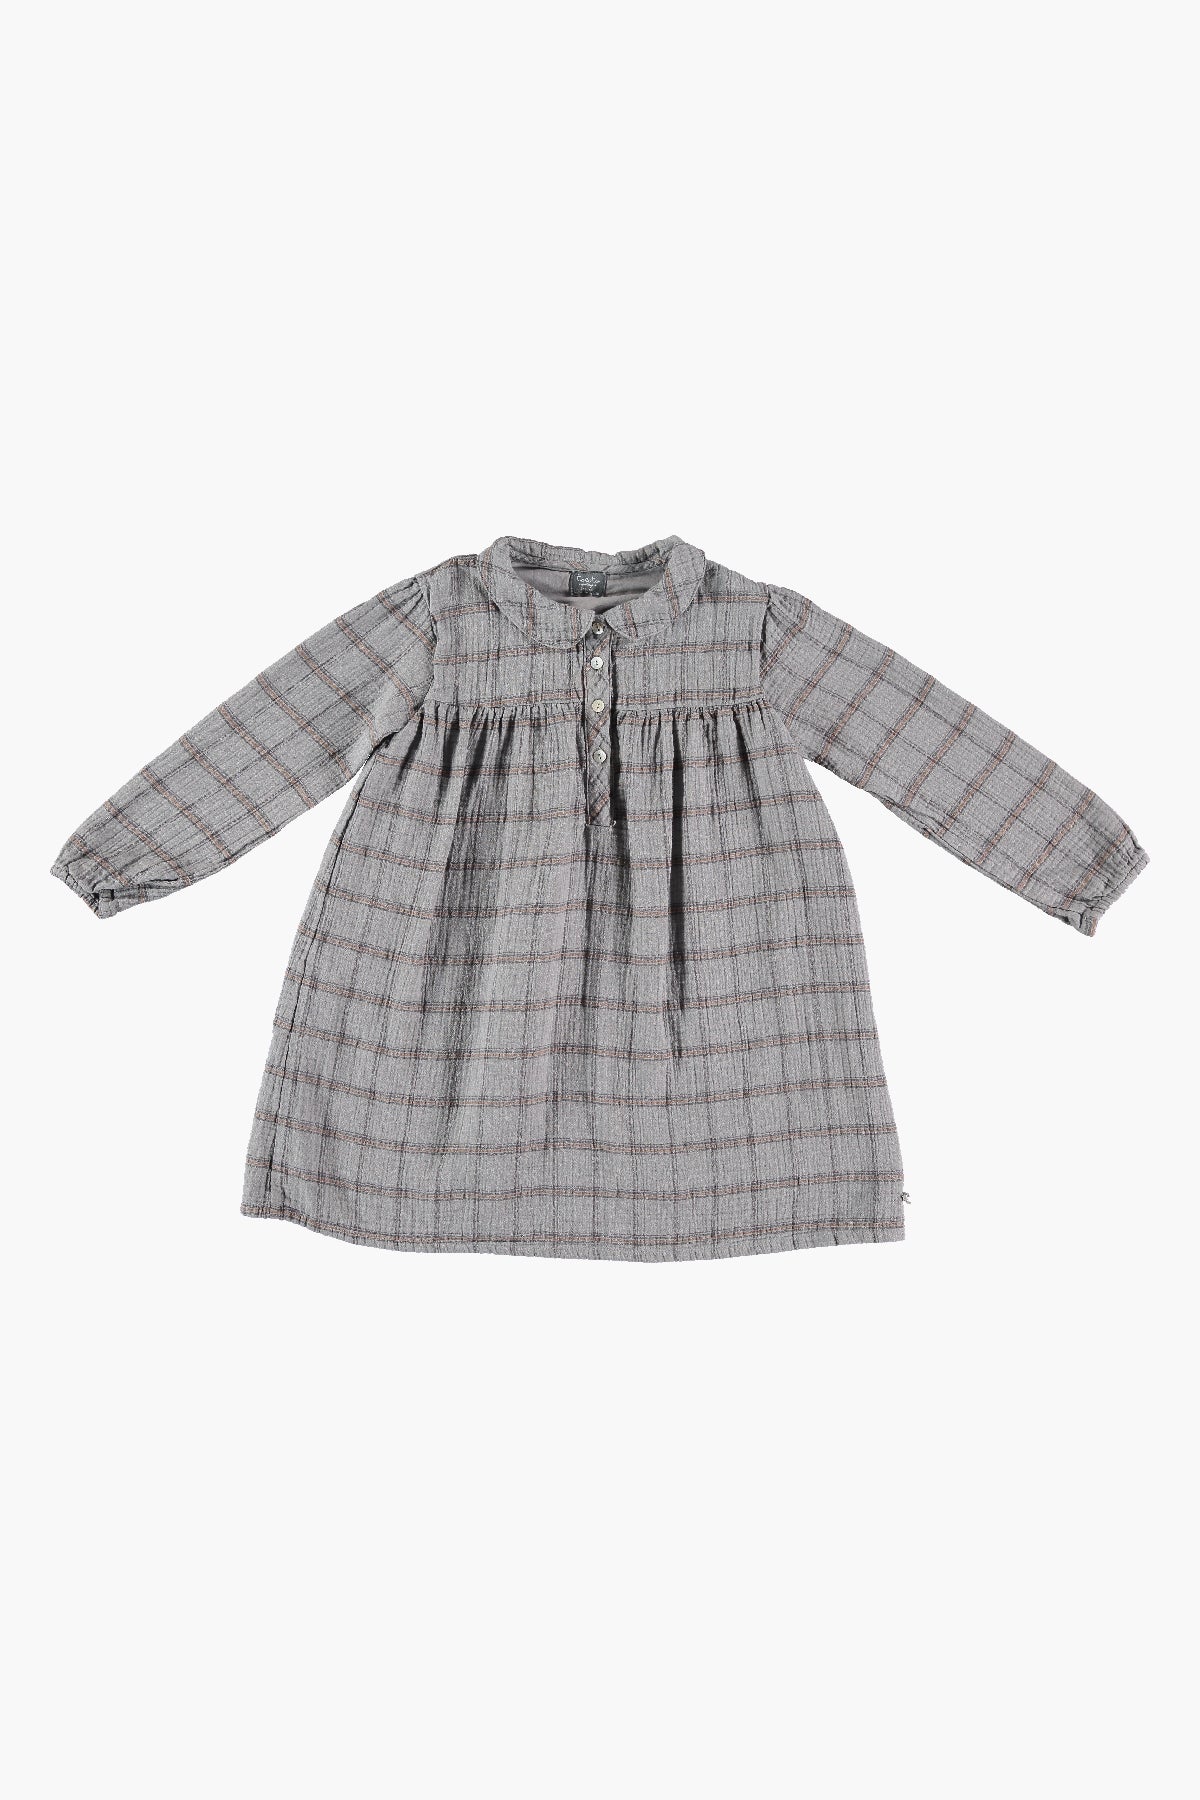 Tocoto Vintage Checkered Girls Dress – Mini Ruby